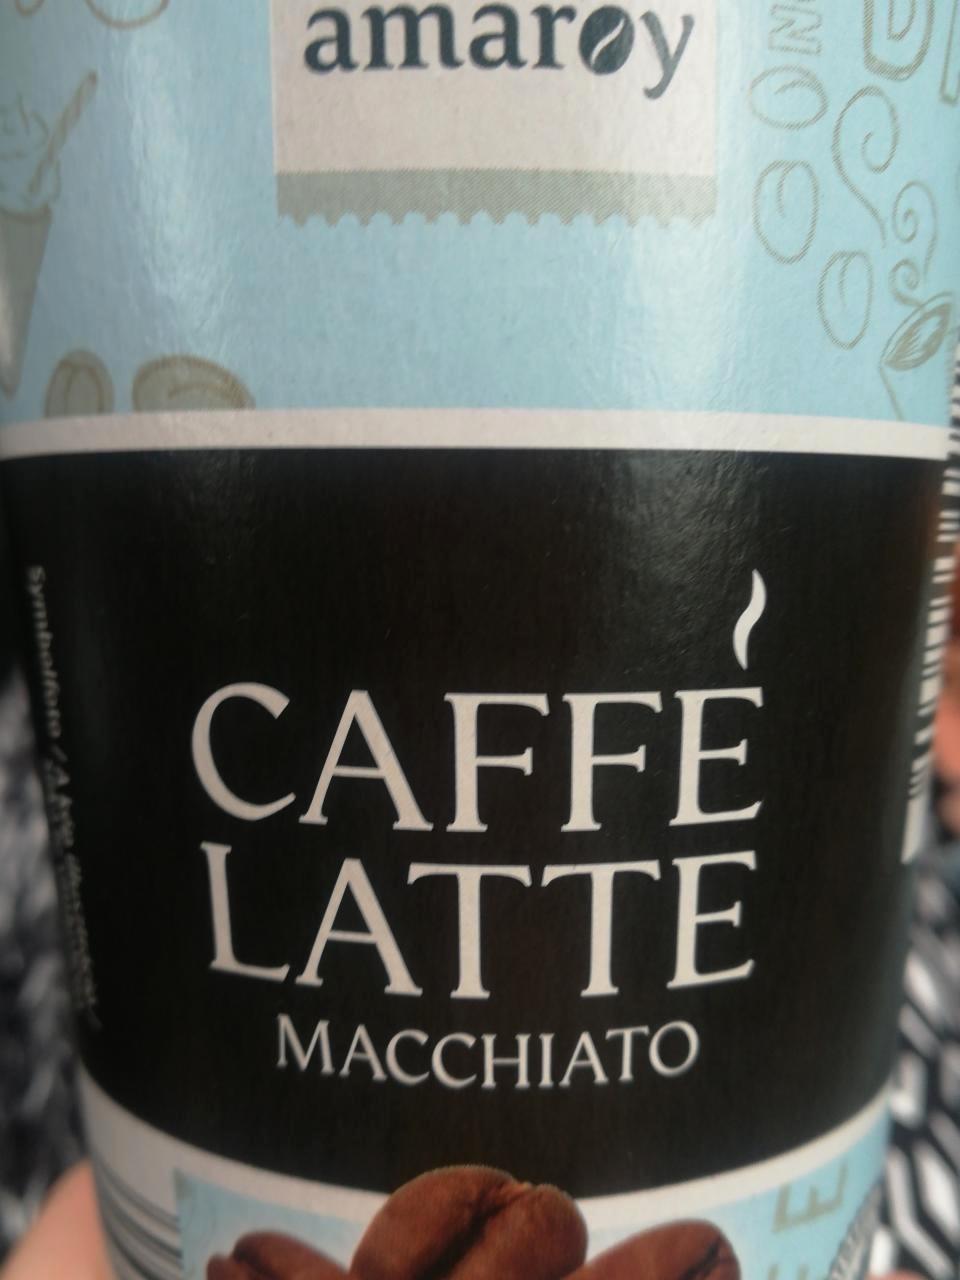 Képek - Caffe Latte macchiato Amaroy